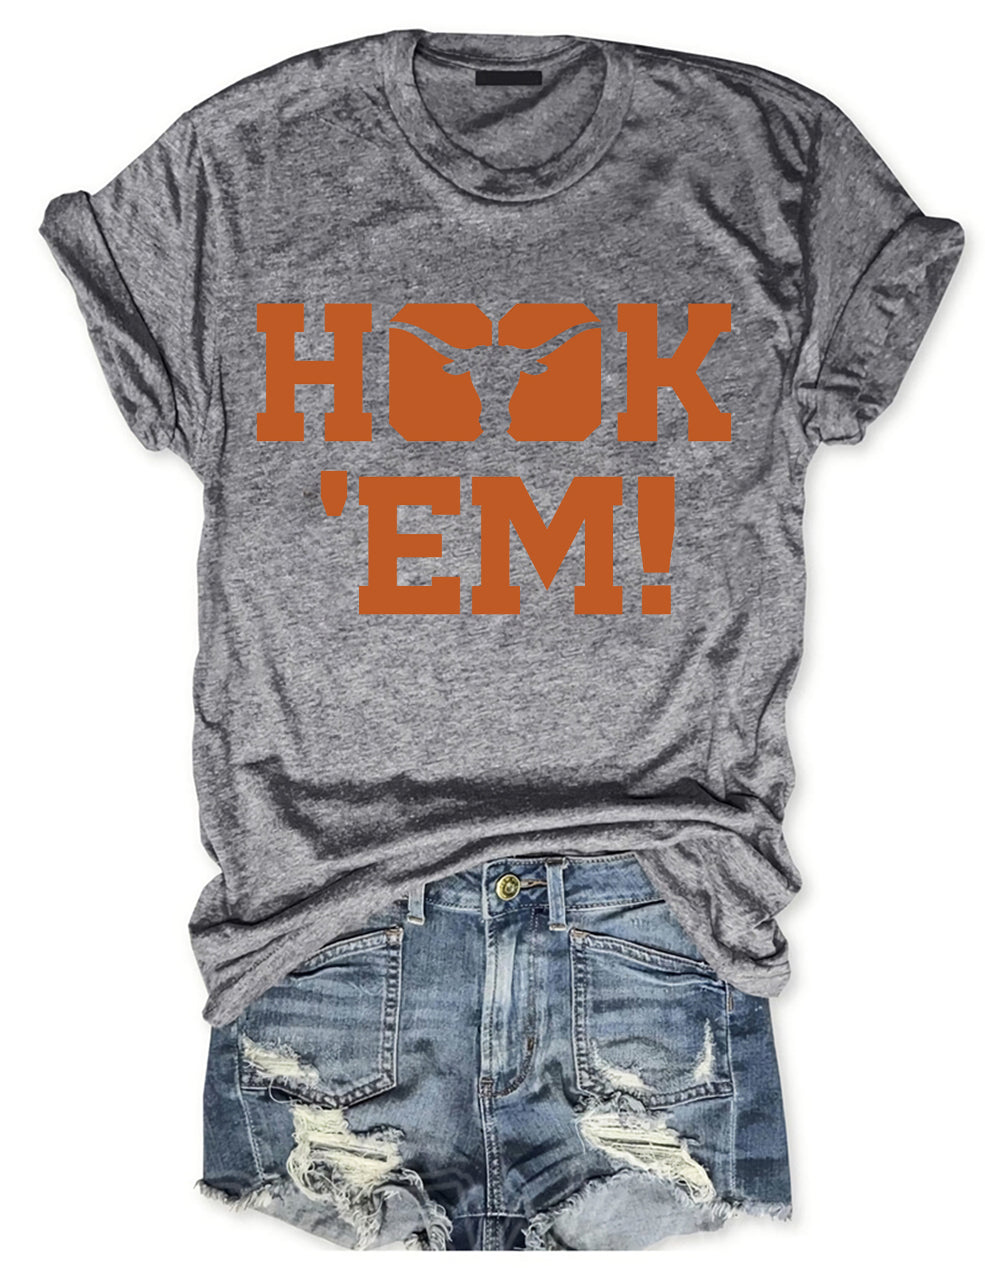 Hook 'EM T-shirt